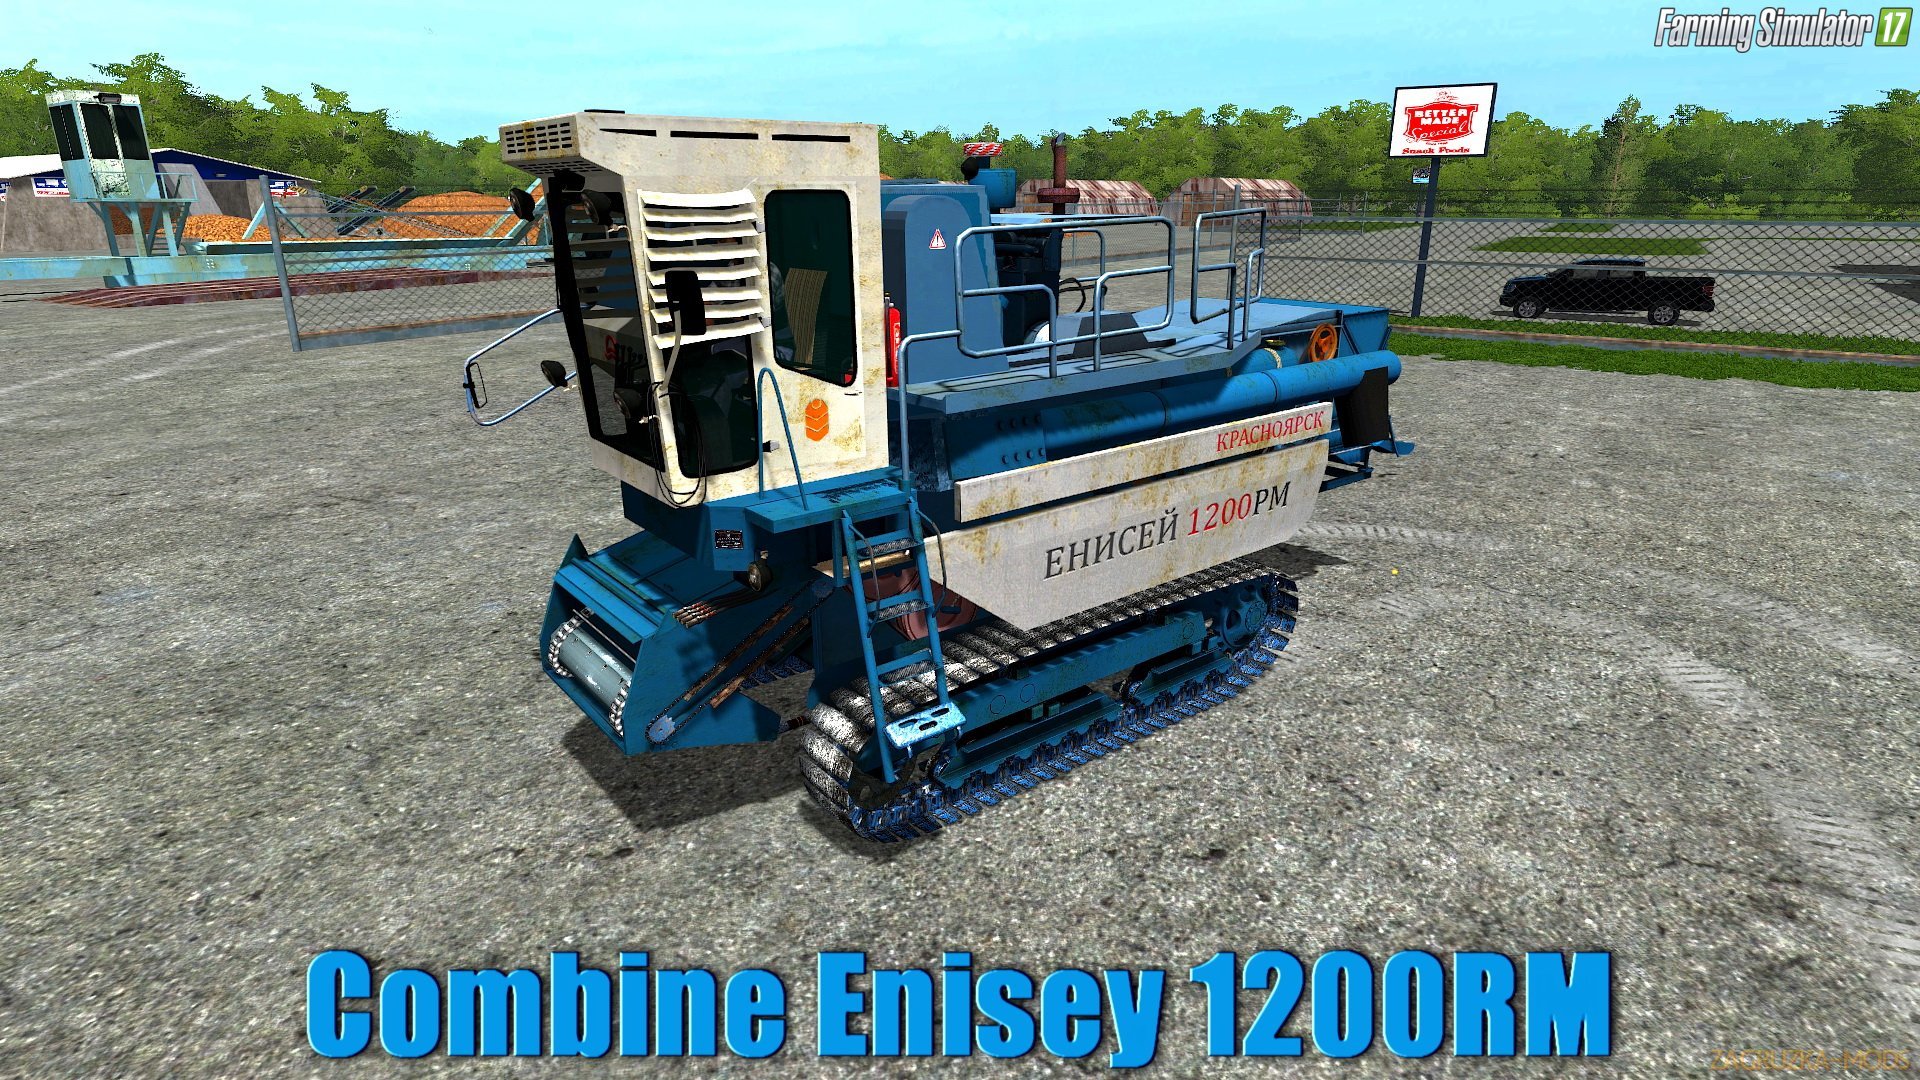 Enisey 1200RM v2.0 for FS 17